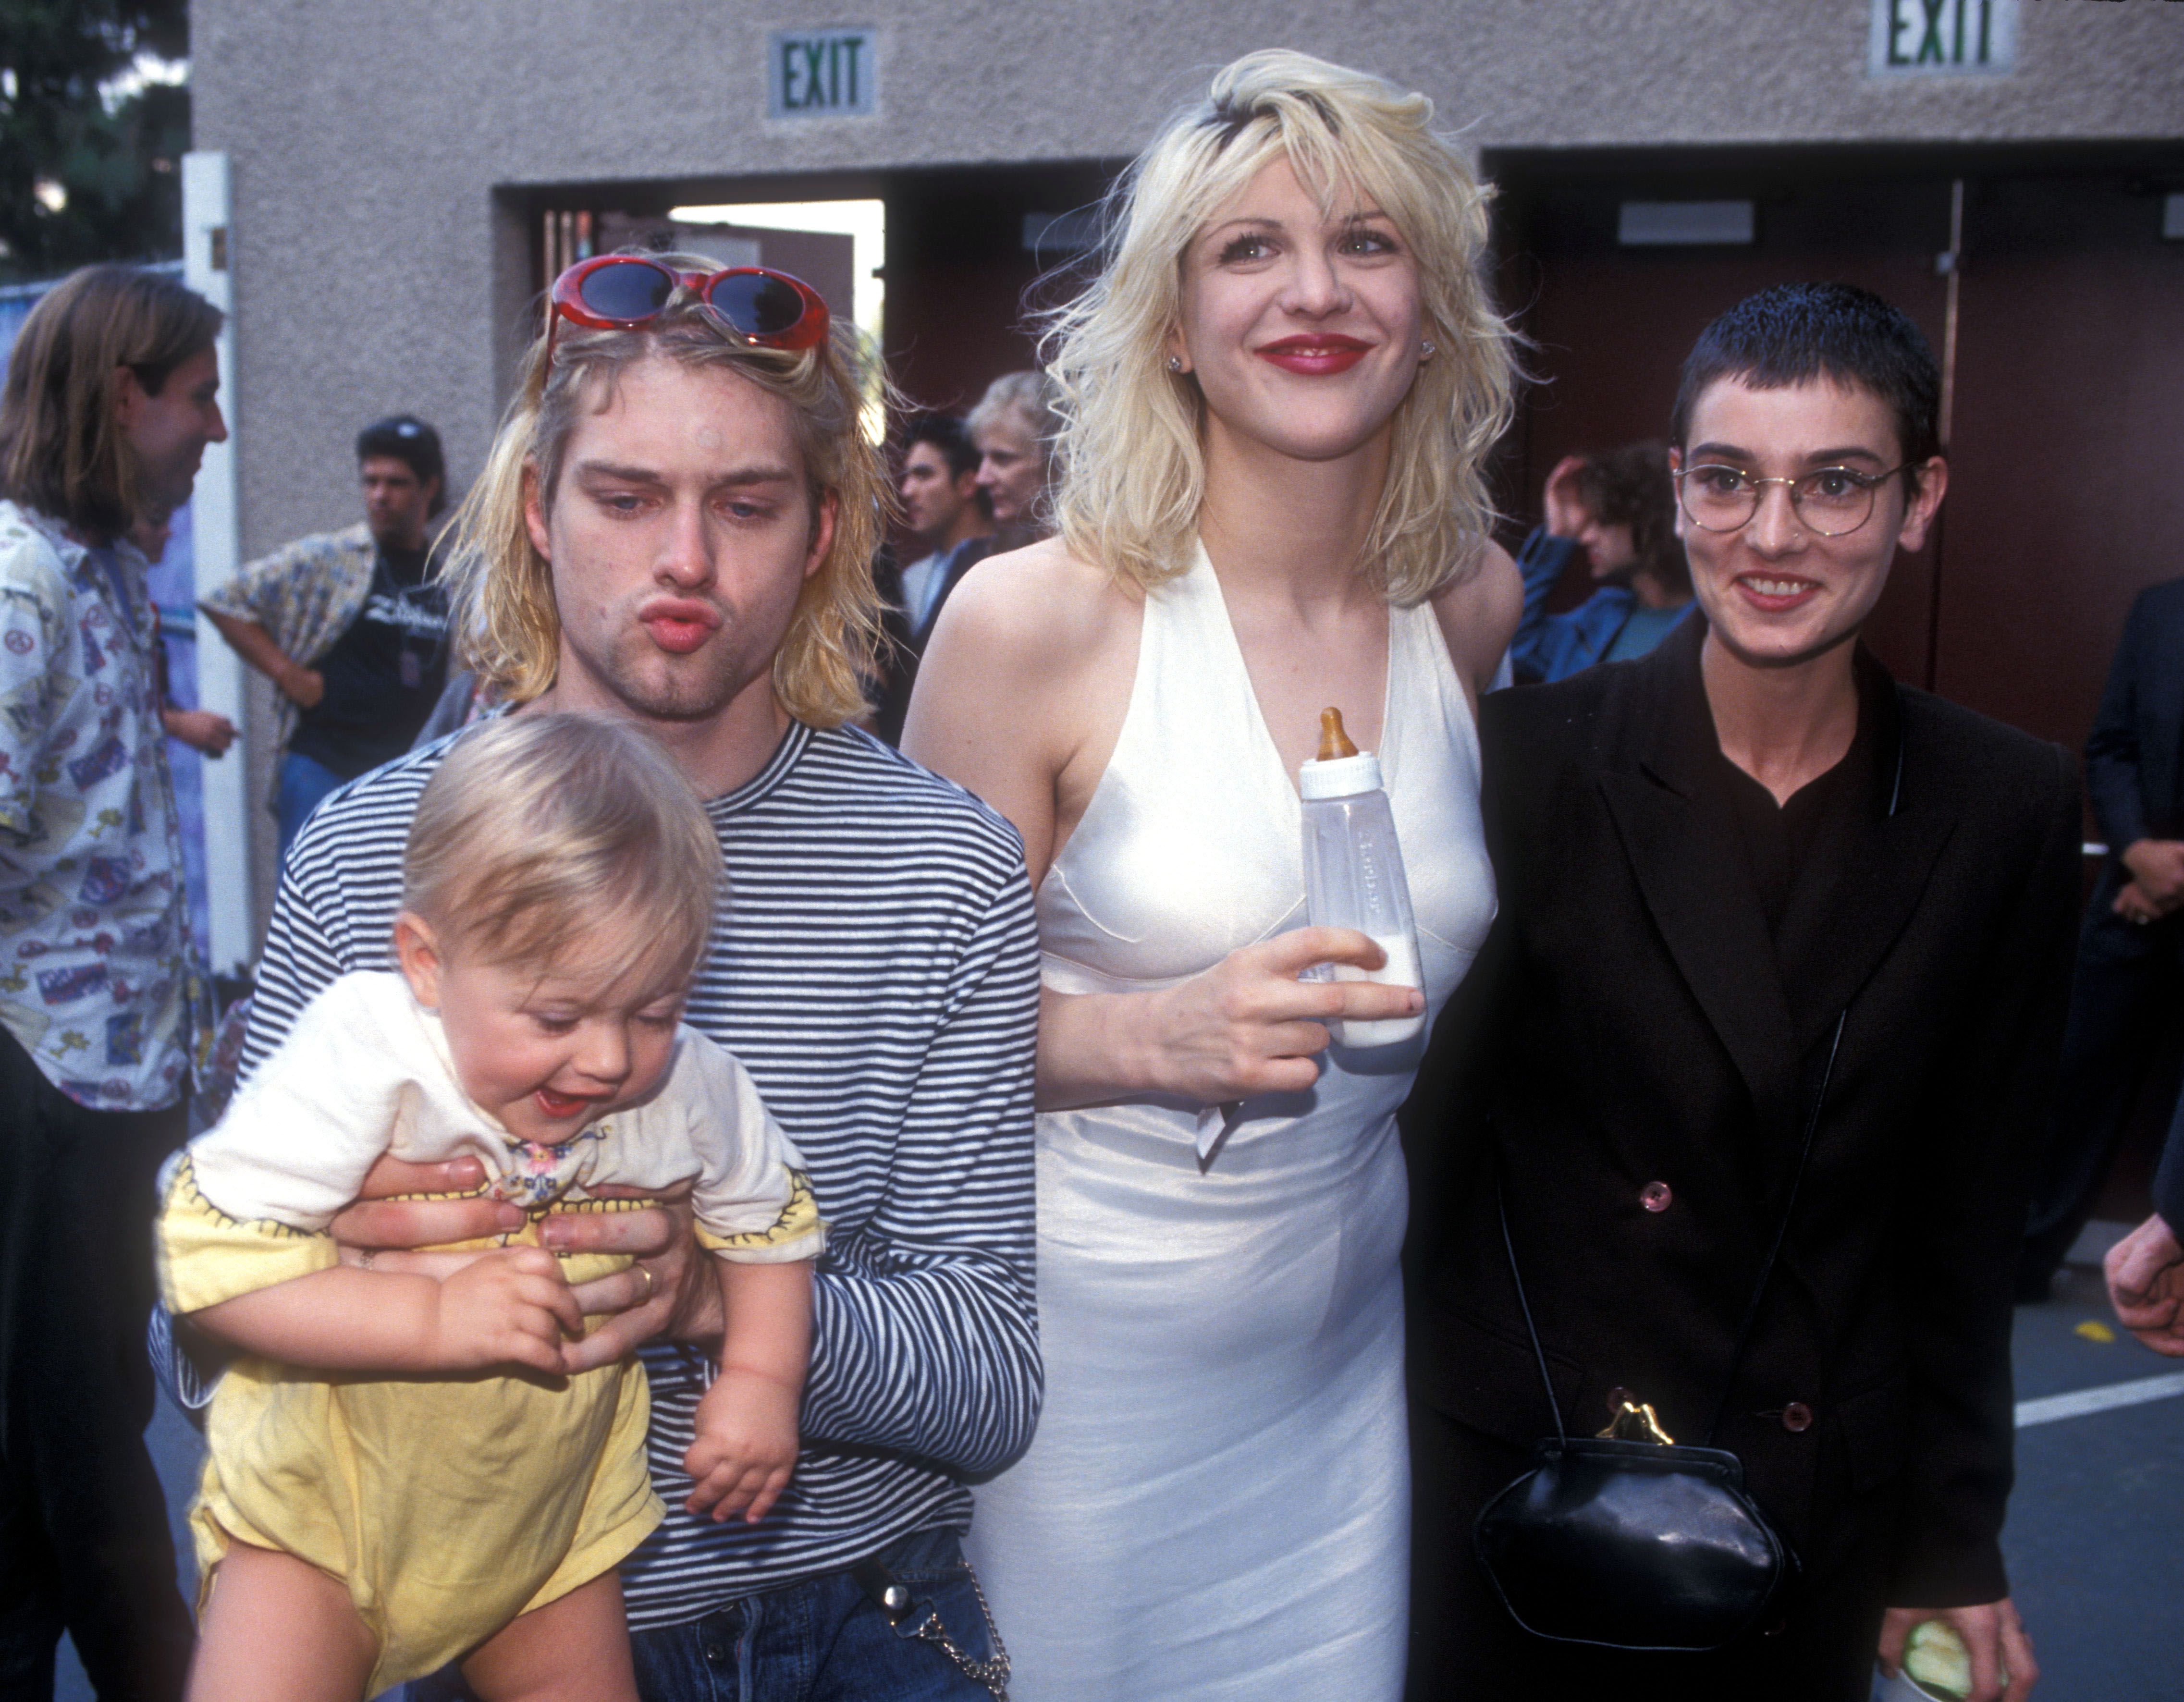 25 momentos de Kurt Cobain en fotos - Mejores imágenes de Kurt Cobain